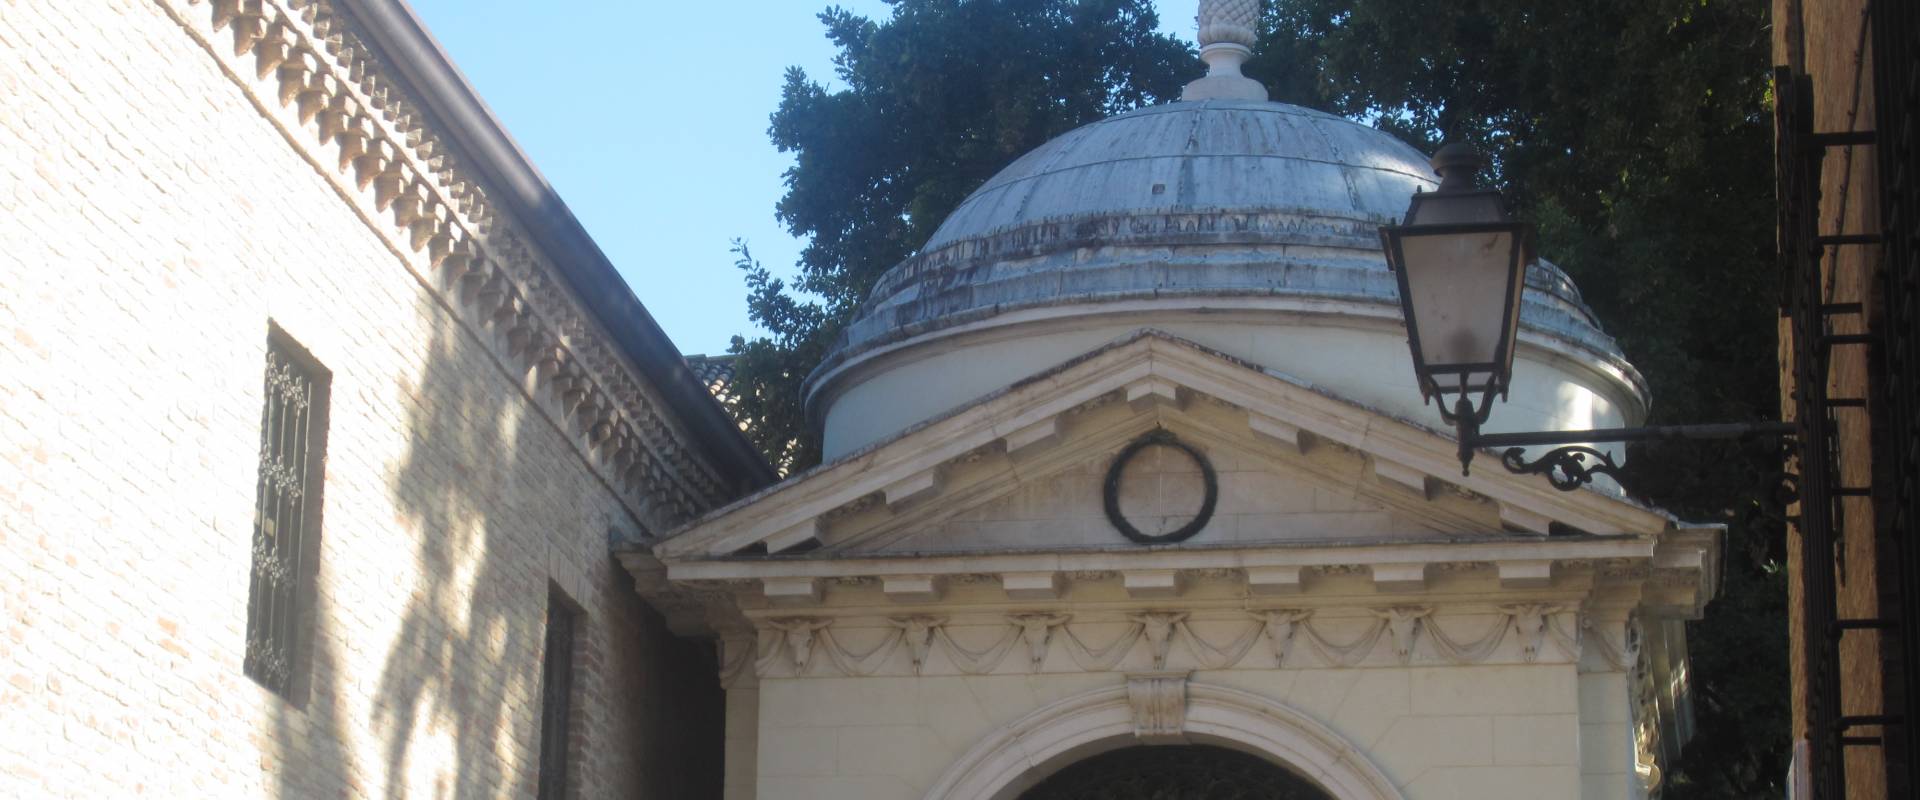 Tomba di Dante Alighieri - Ravenna foto di Ebe94